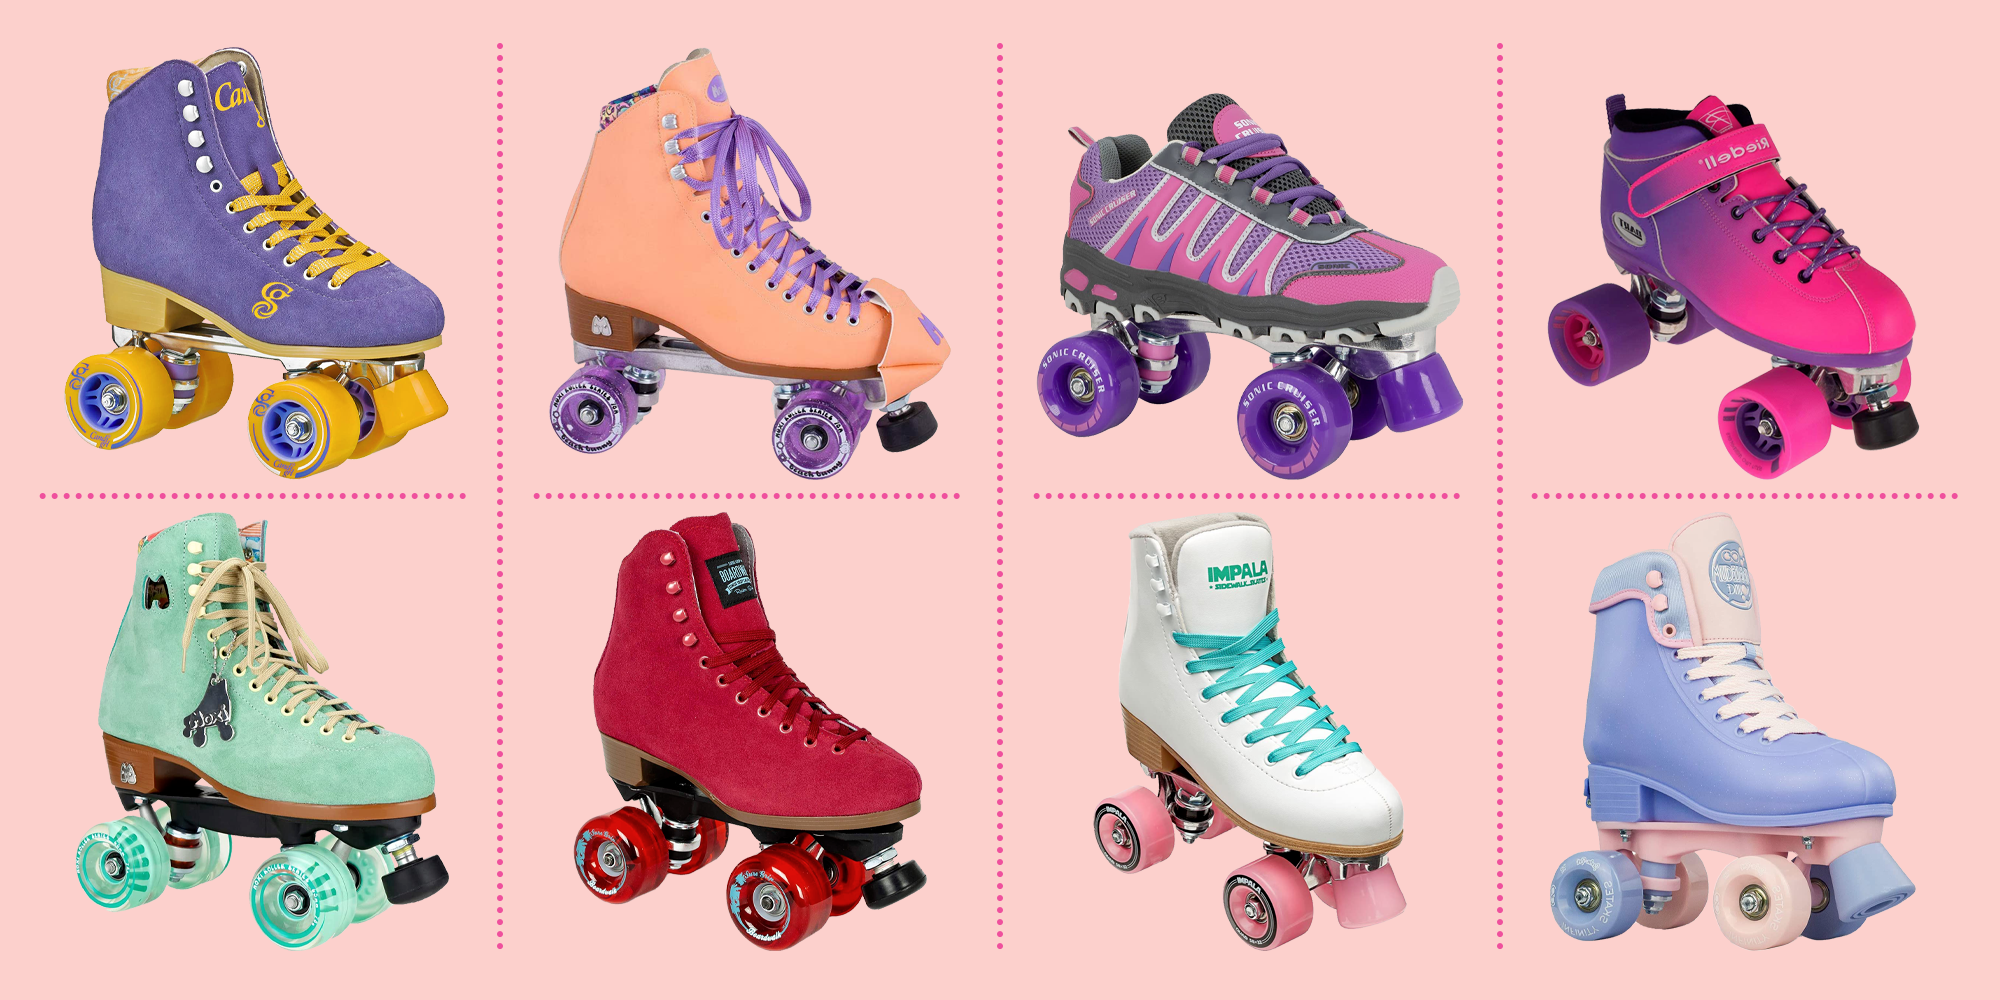 Roller Skates for Women Classic High-Top Shiny Graffiti Roller Skates for Adult Outdoor?Light-Up Four-Wheel Kids Roller Skates Indoor with Bag 